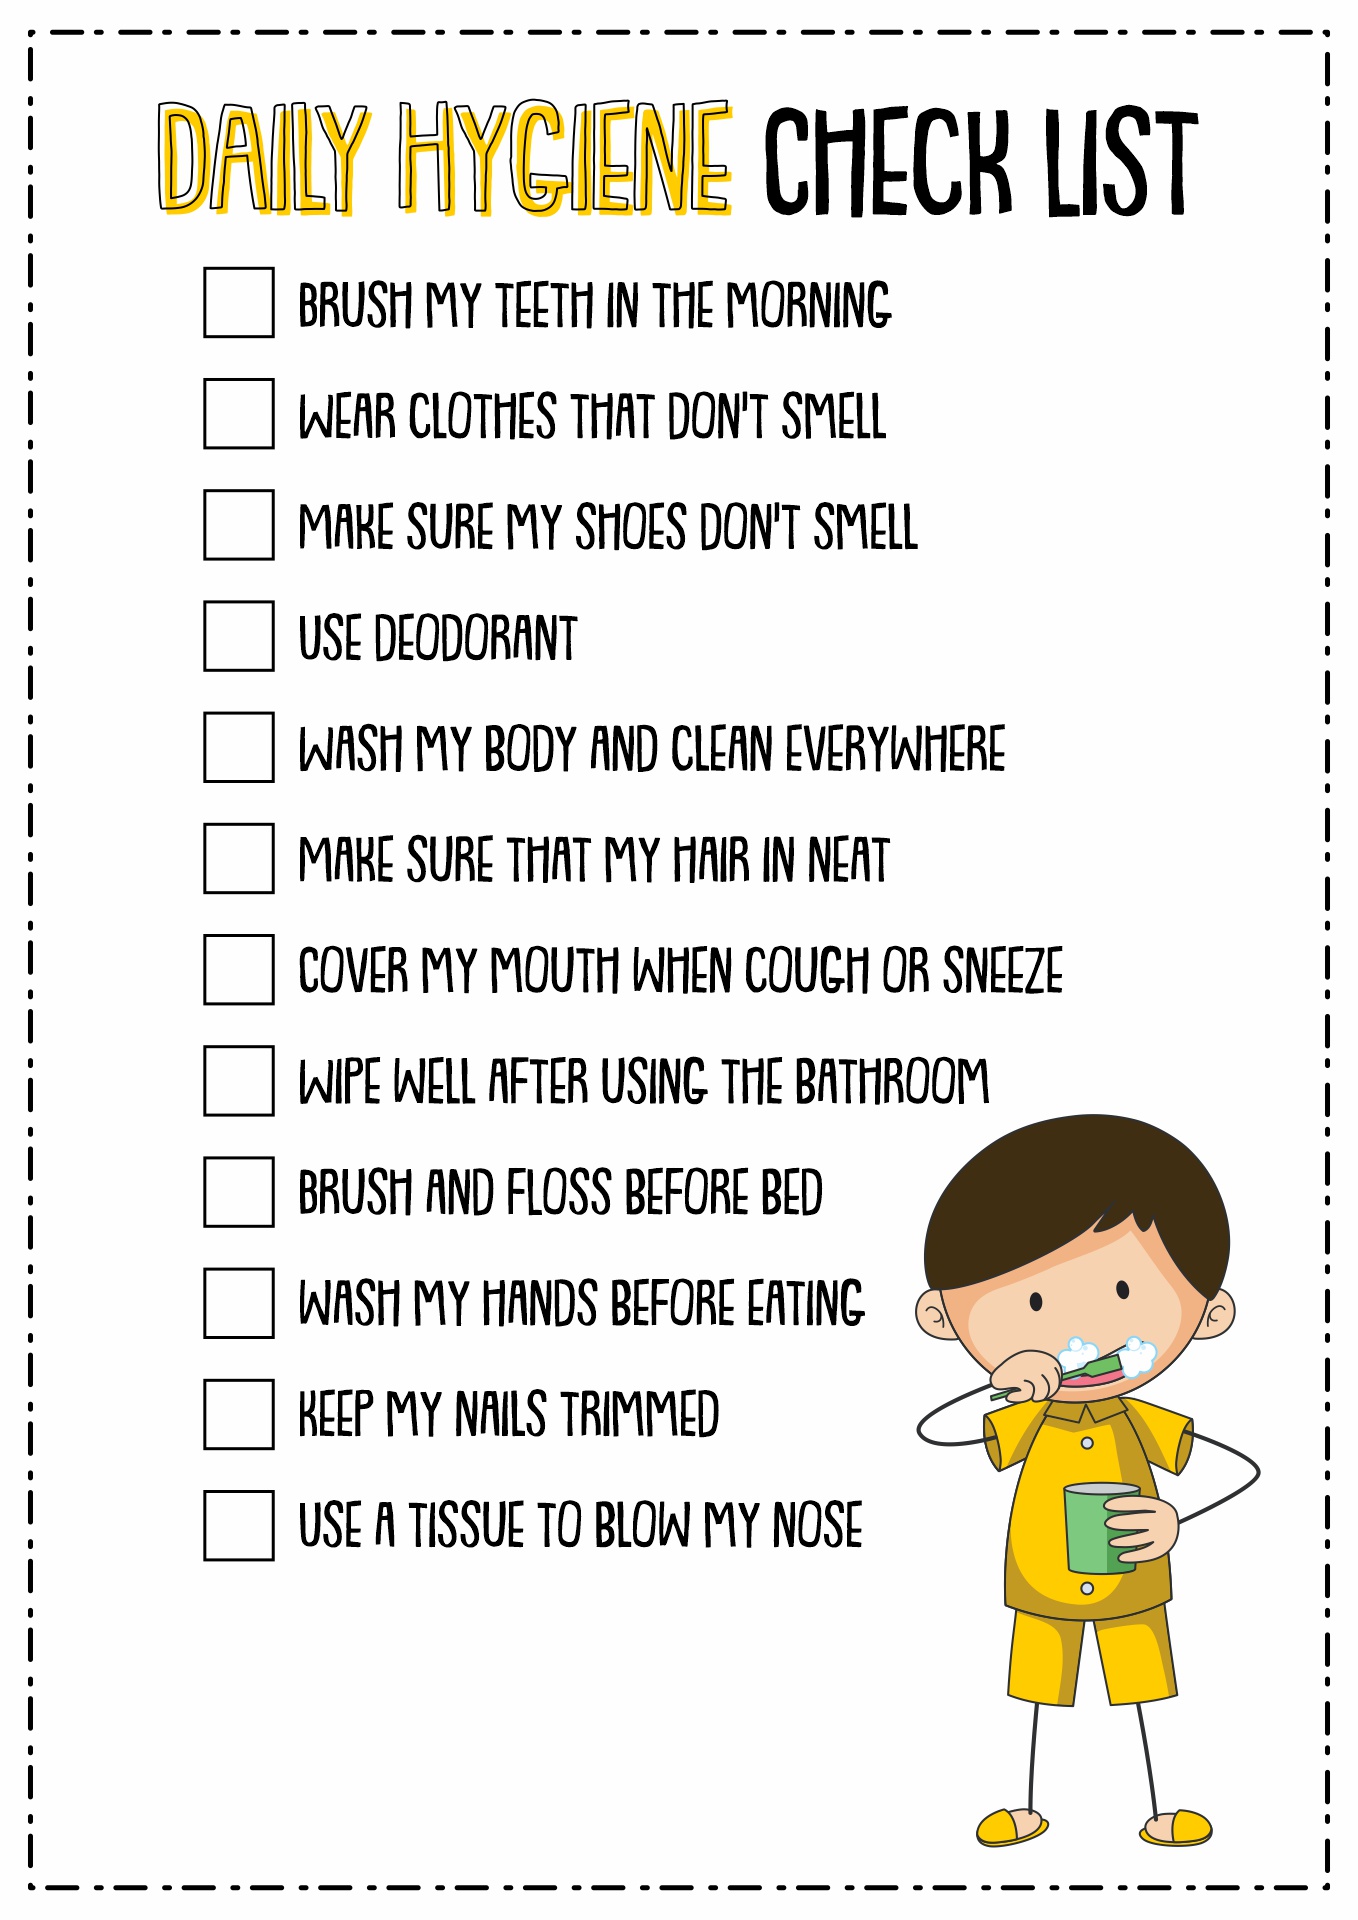 personal-hygiene-checklist-printable